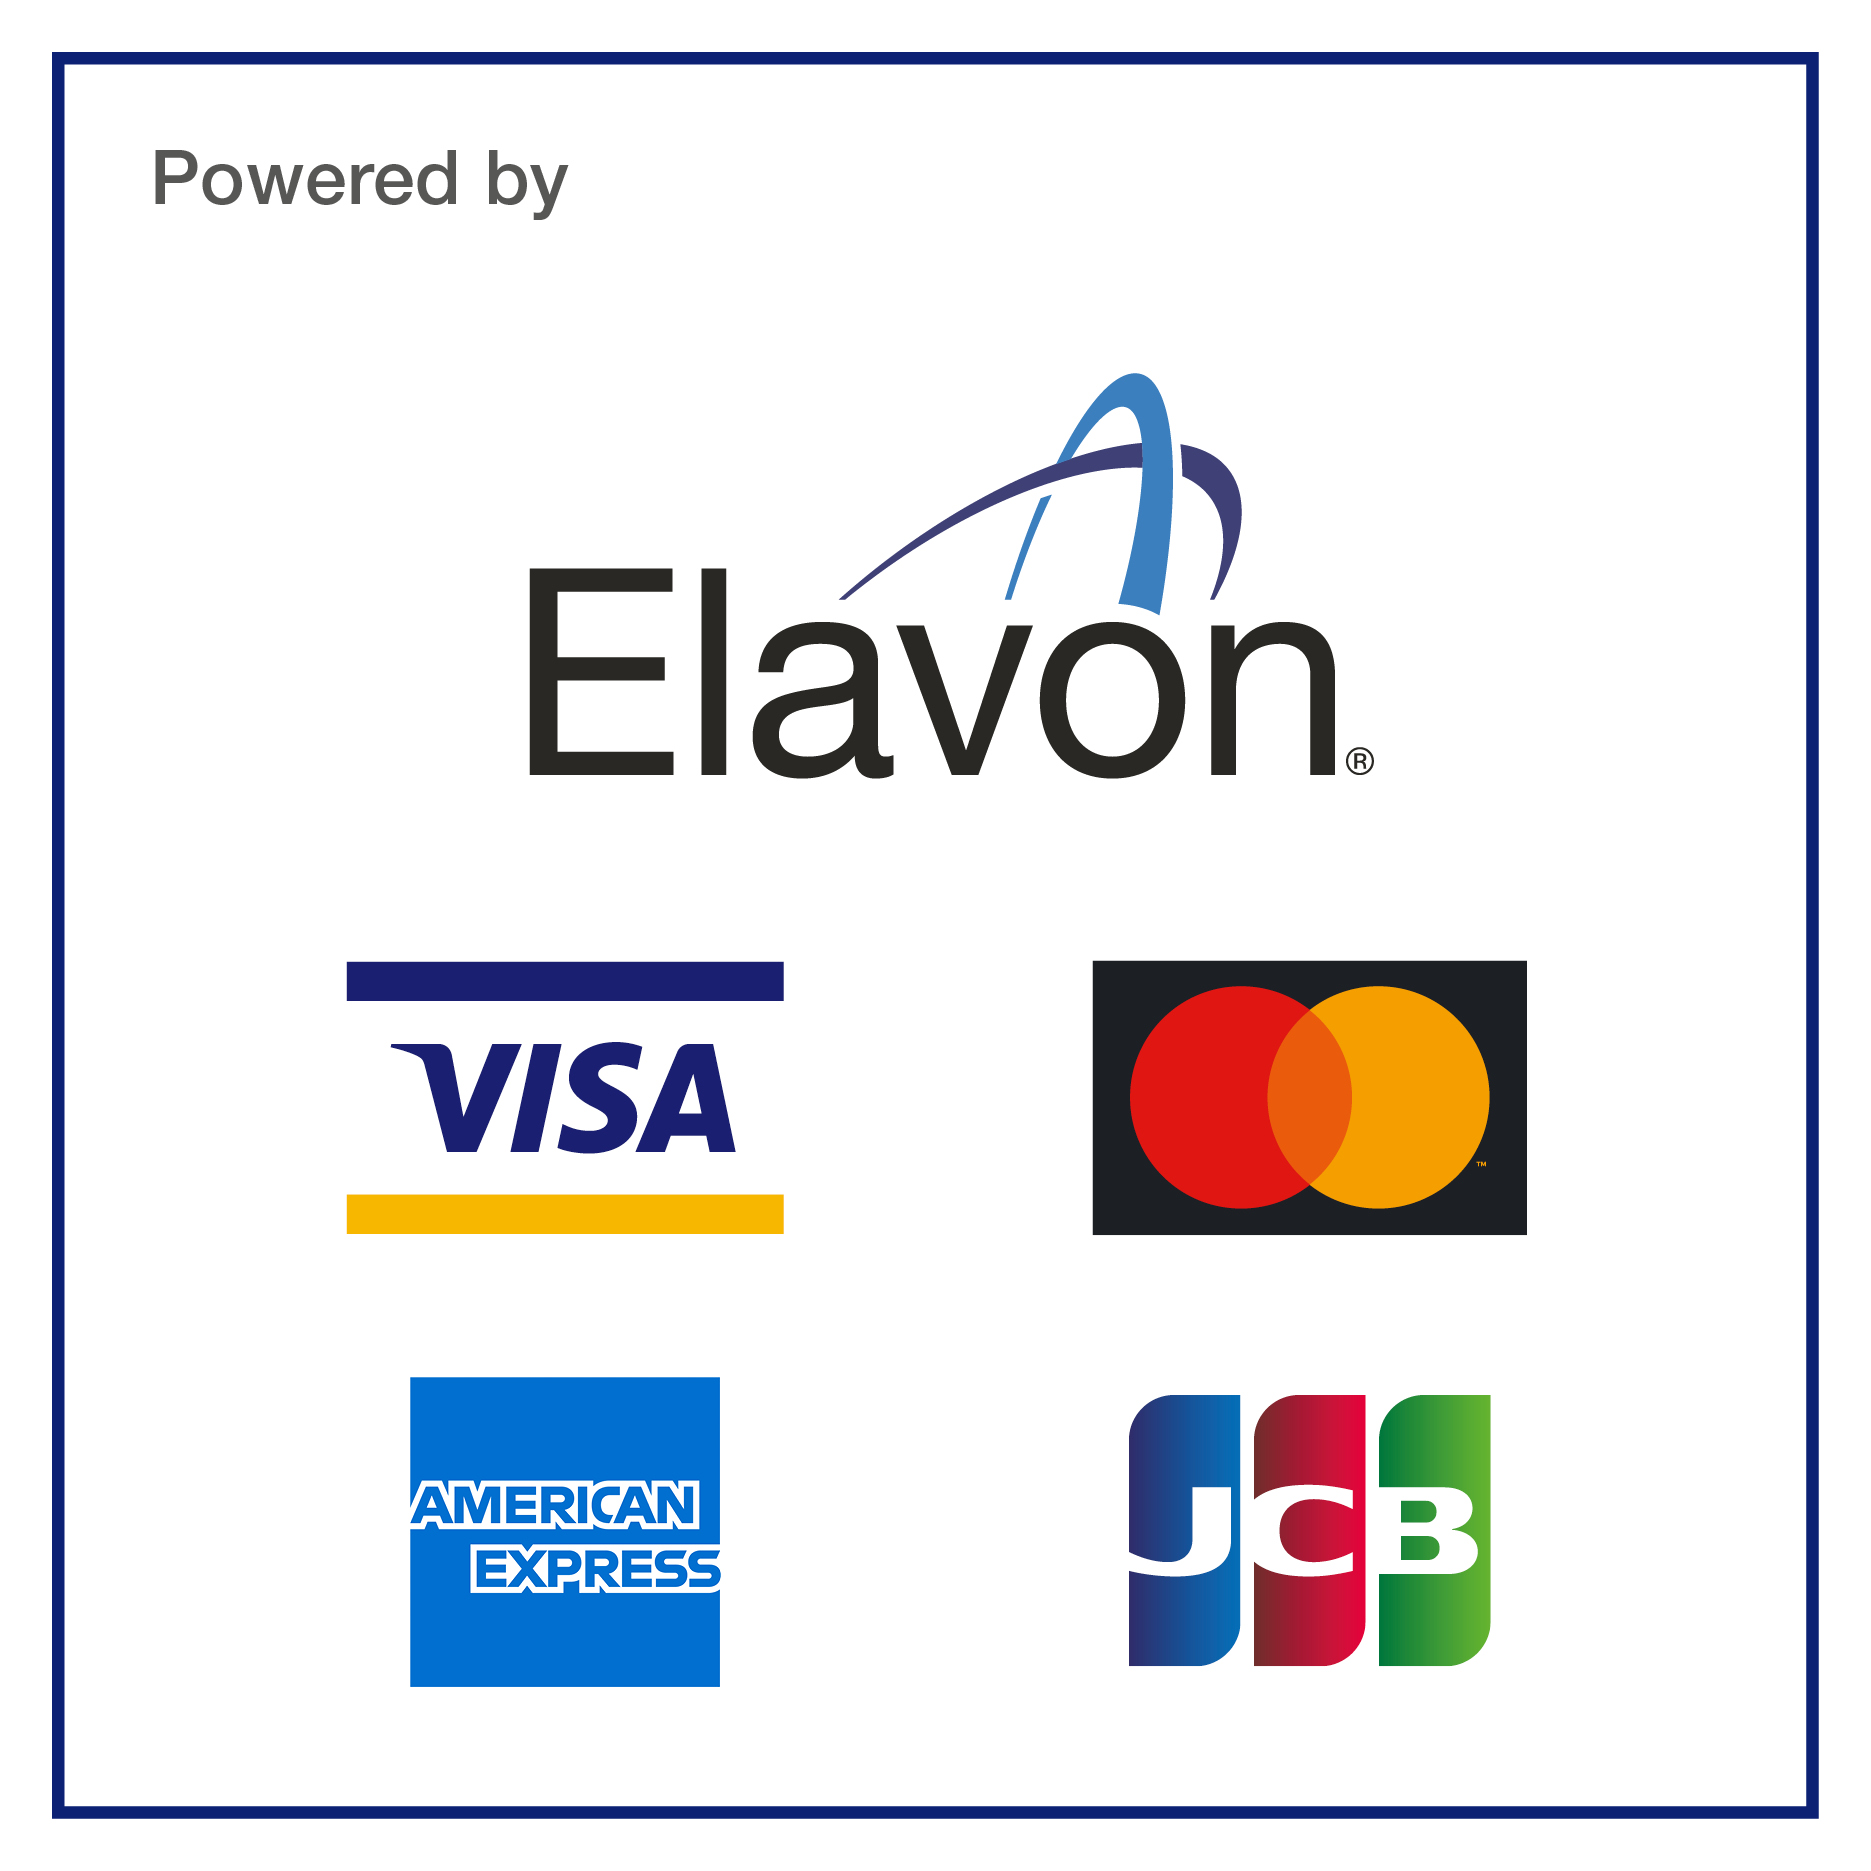 Card scheme logo: Visa, Mastercard, JCB, American Express